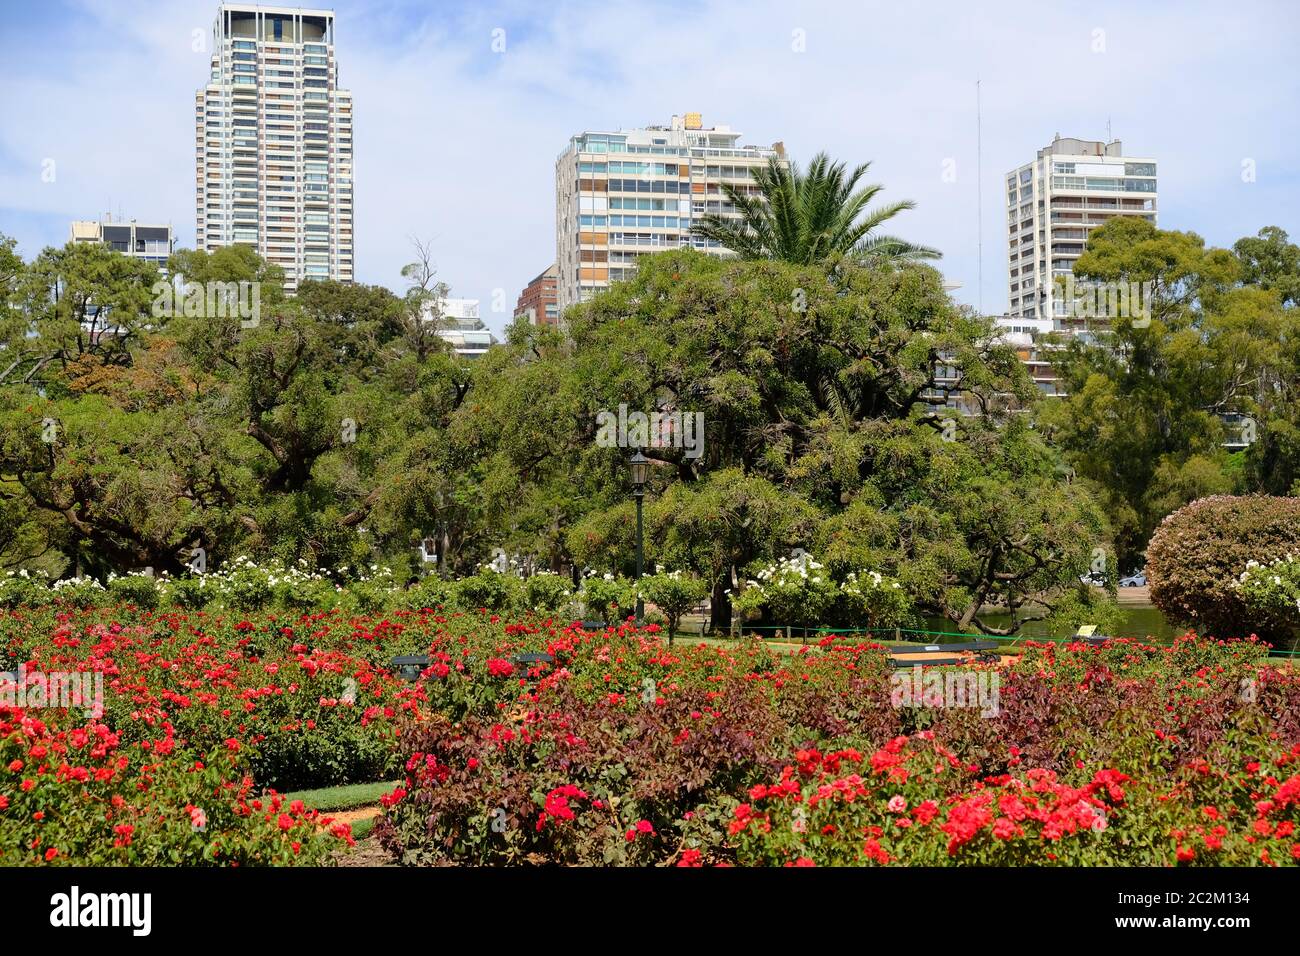 Argentina Buenos Aires - Rose garden in Urban park Bosques de Palermo - Palermo Woods Stock Photo